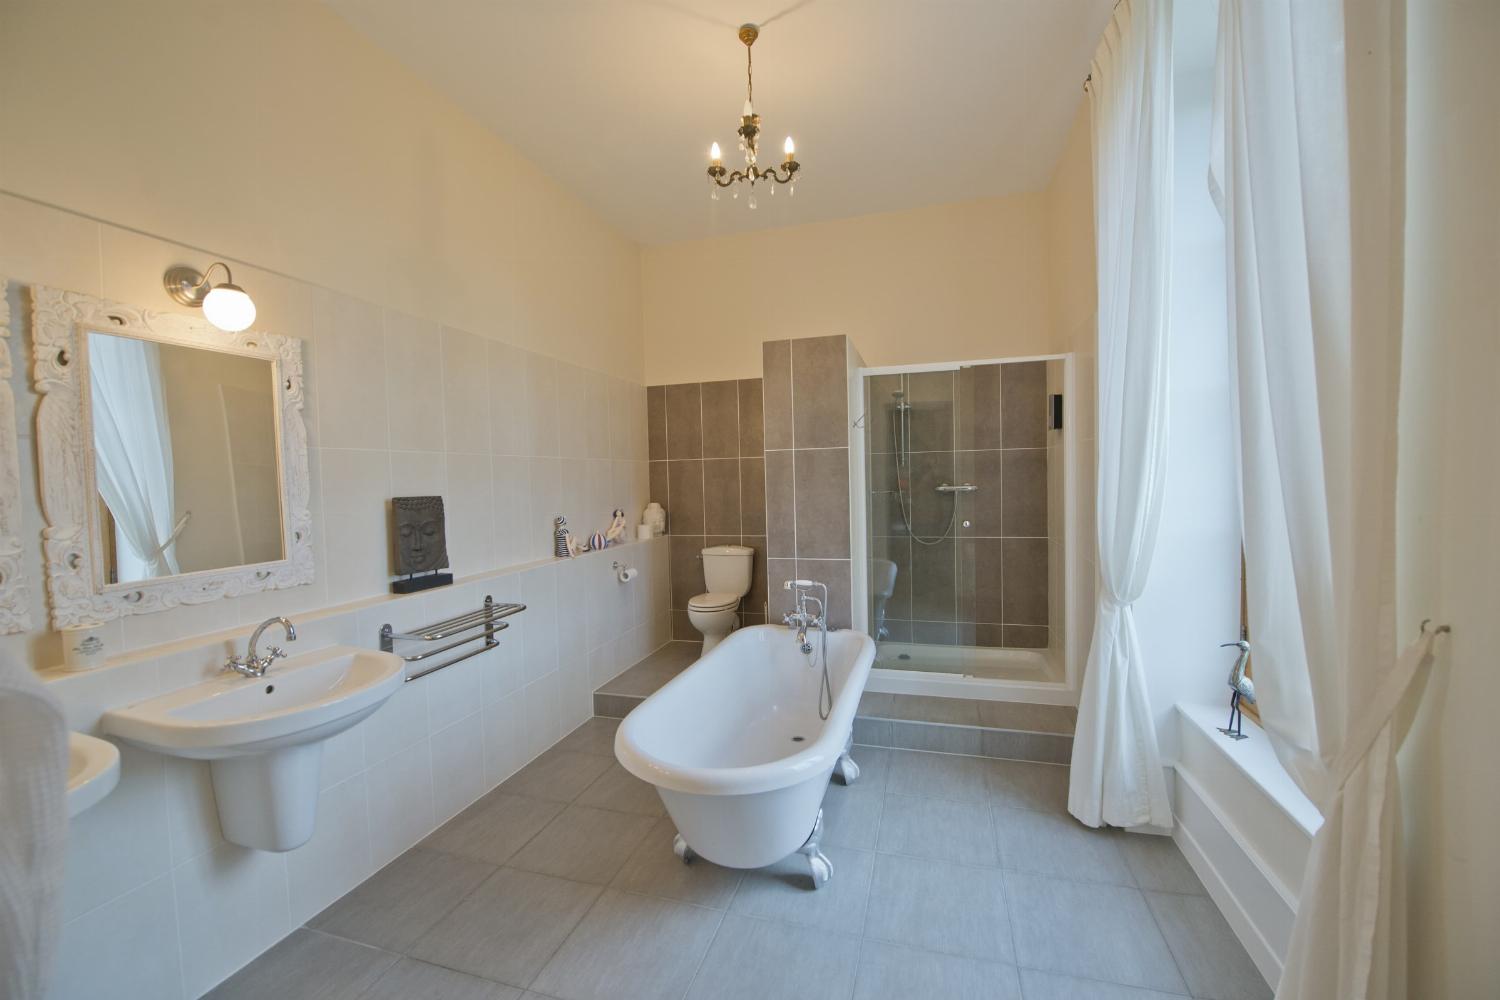 Bathroom | Rental château in Loire